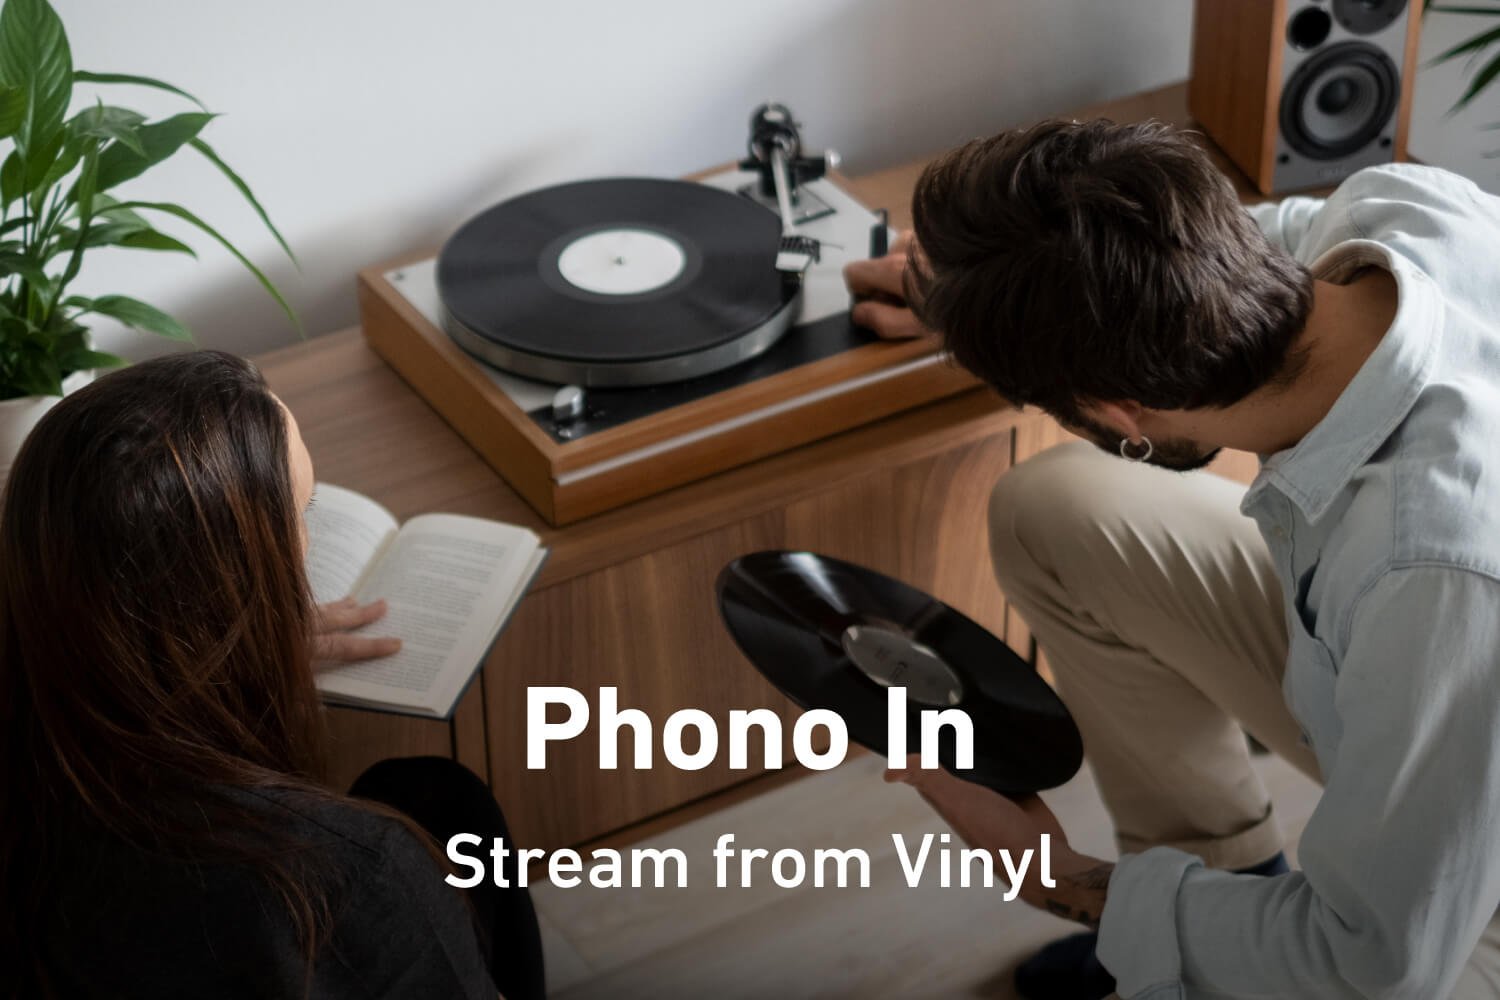 Phono In, Stream from Vinyl